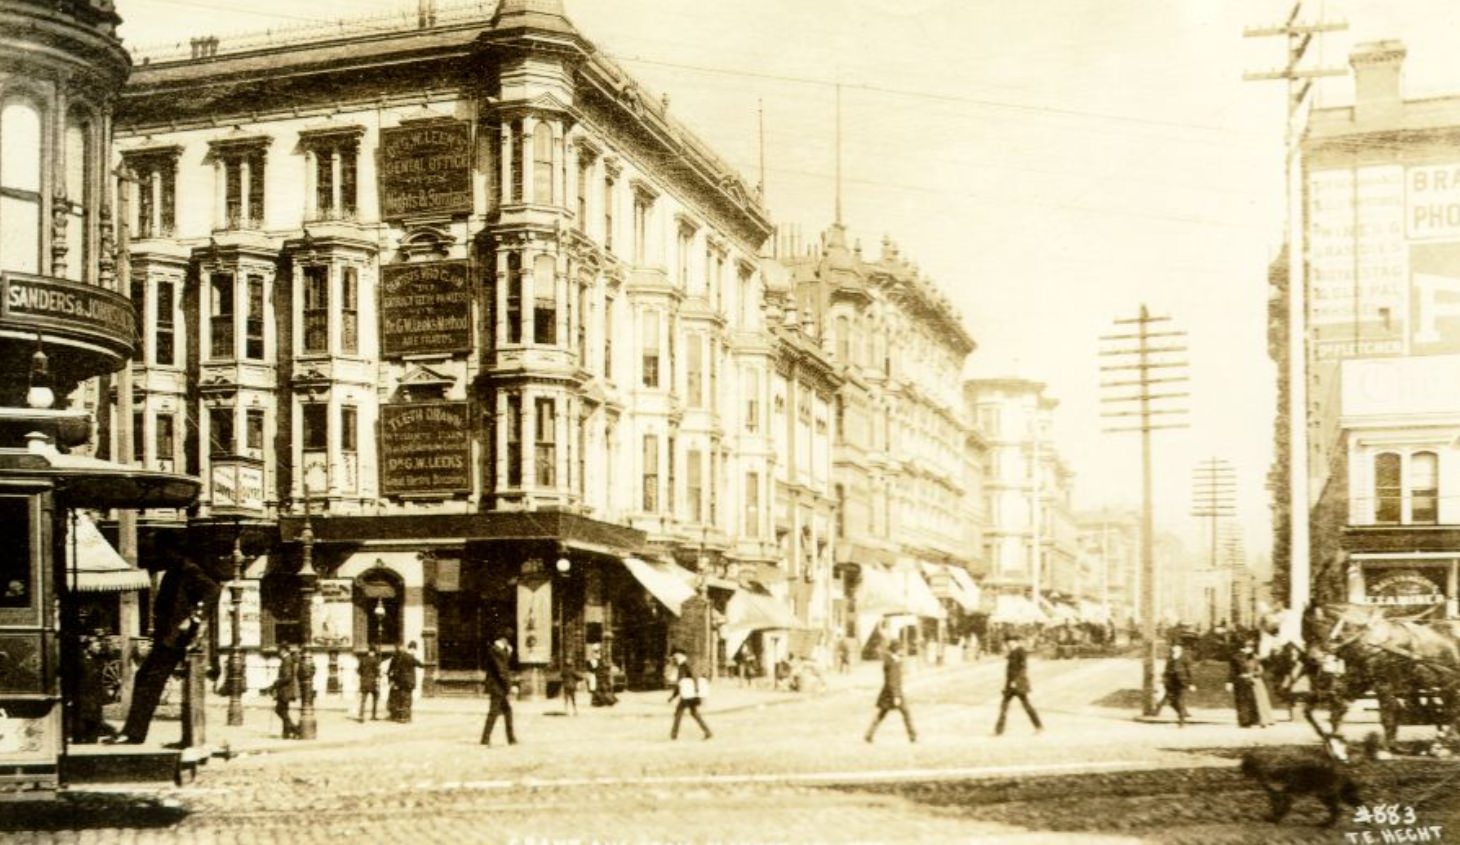 Grant Avenue from Market Street, 1885